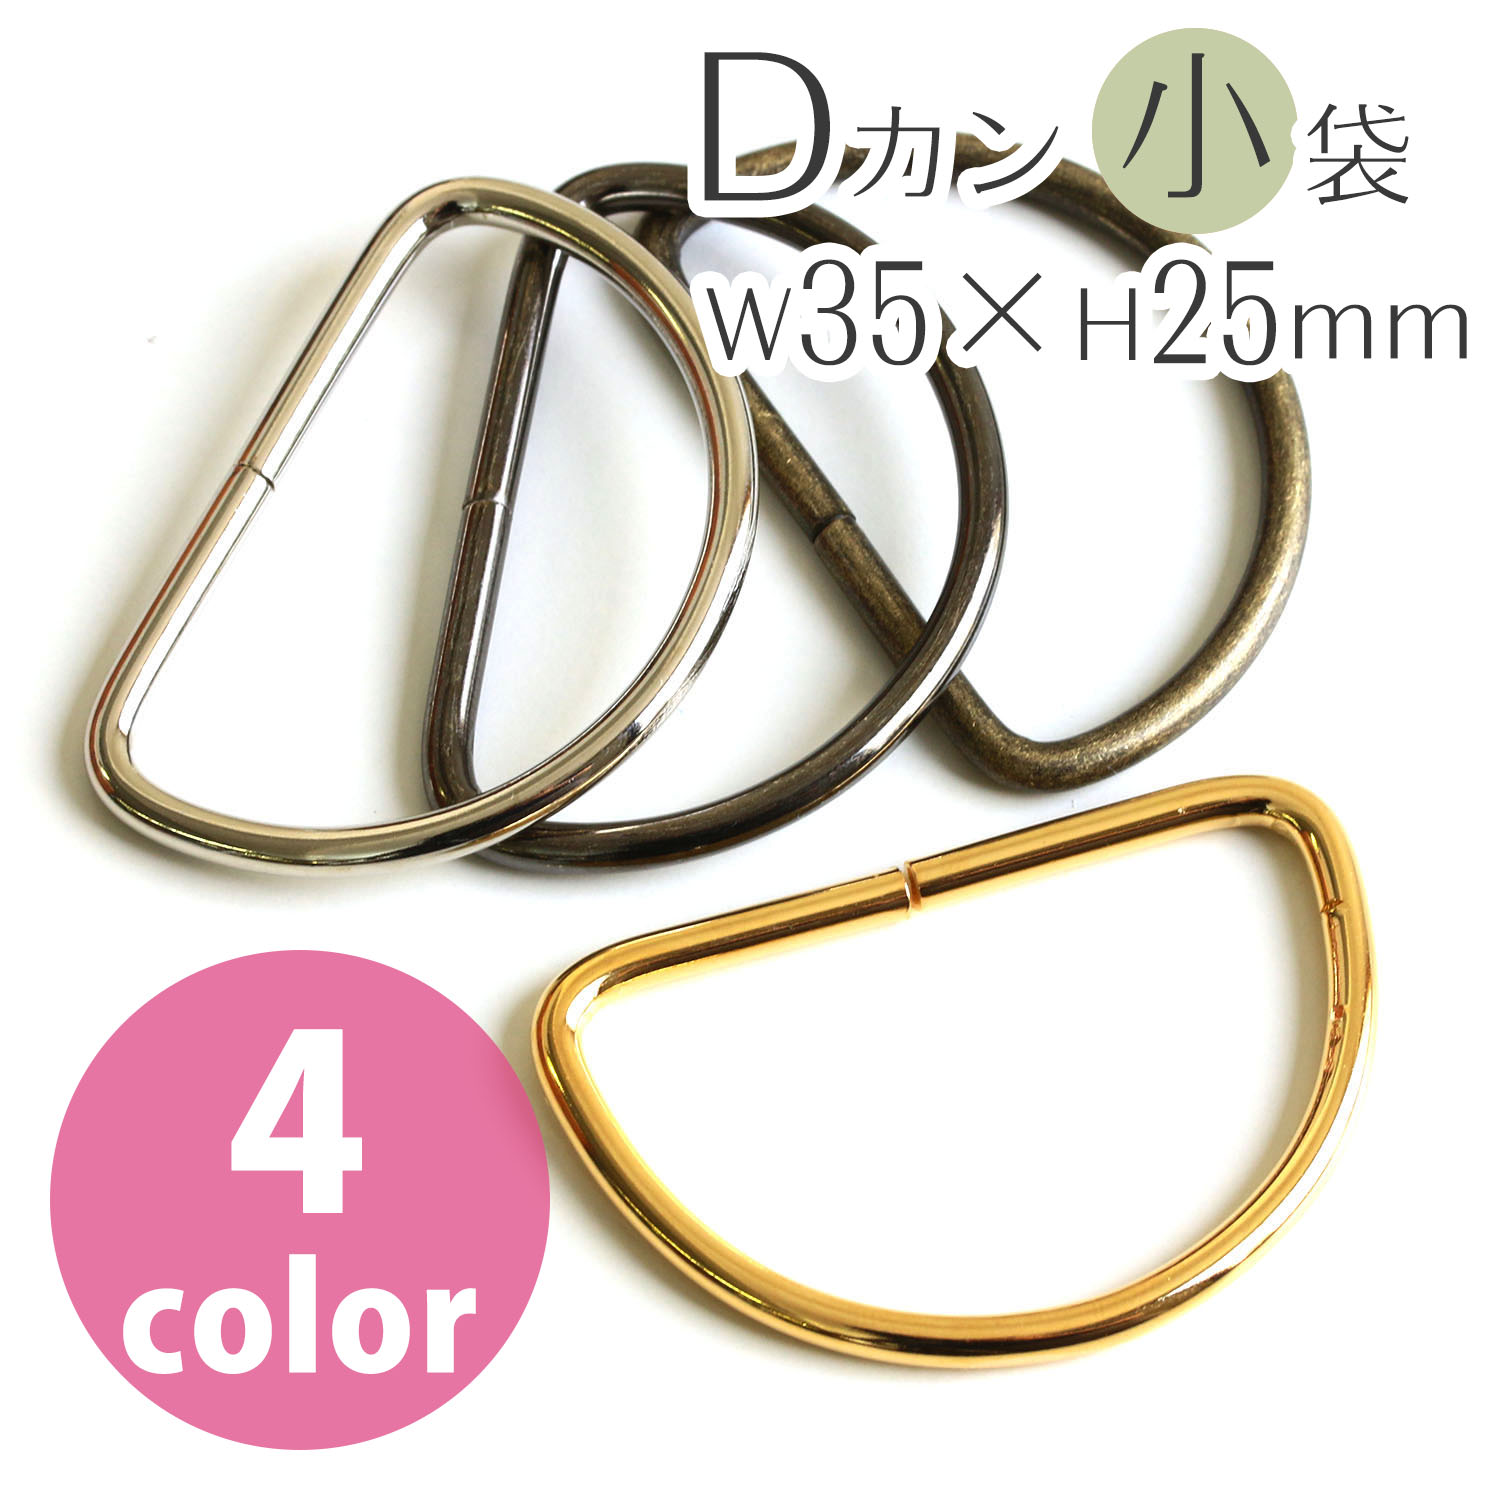 S22 D-Ring  35 x 25mm", diameter 3mm  (bag)